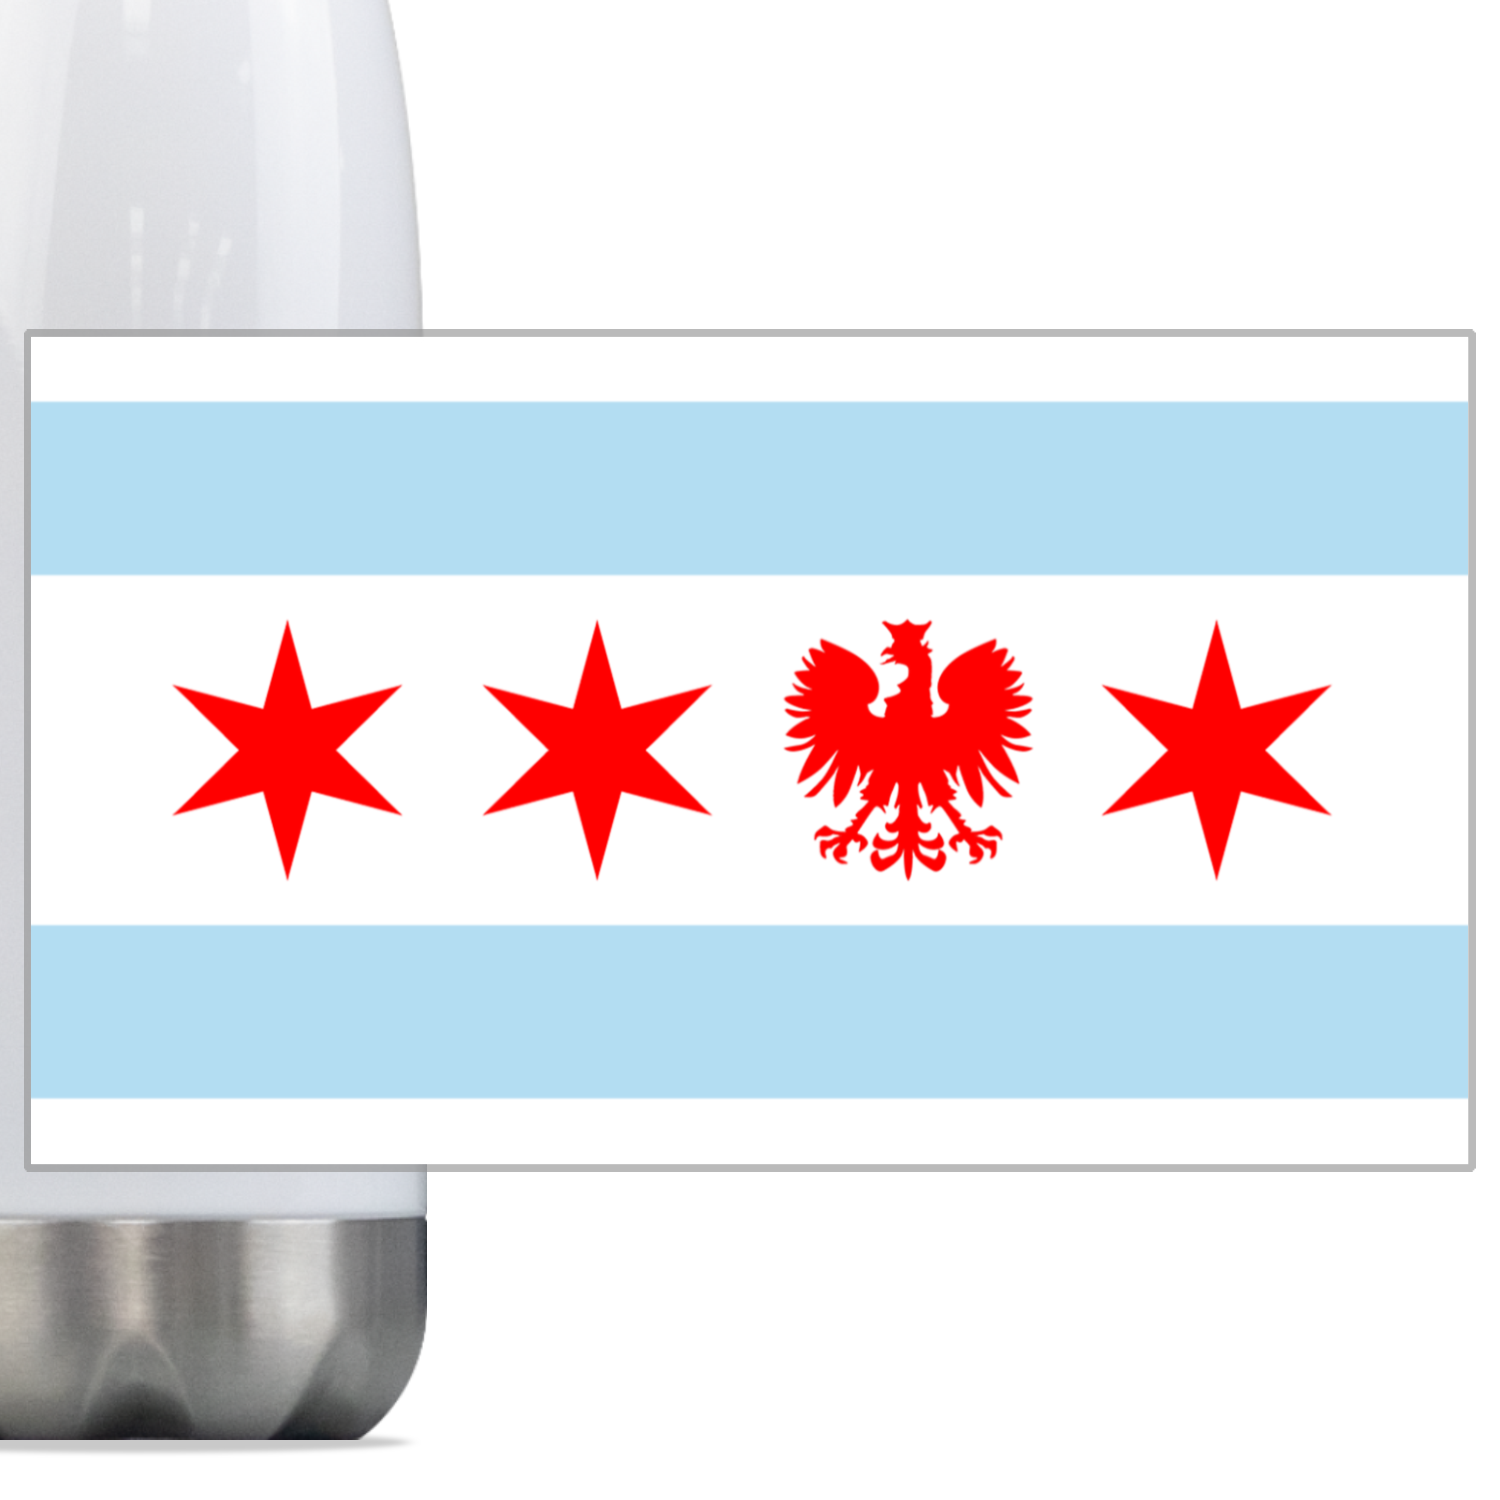 Chicago Flag Polish Single Eagle Steel Slim Bottle